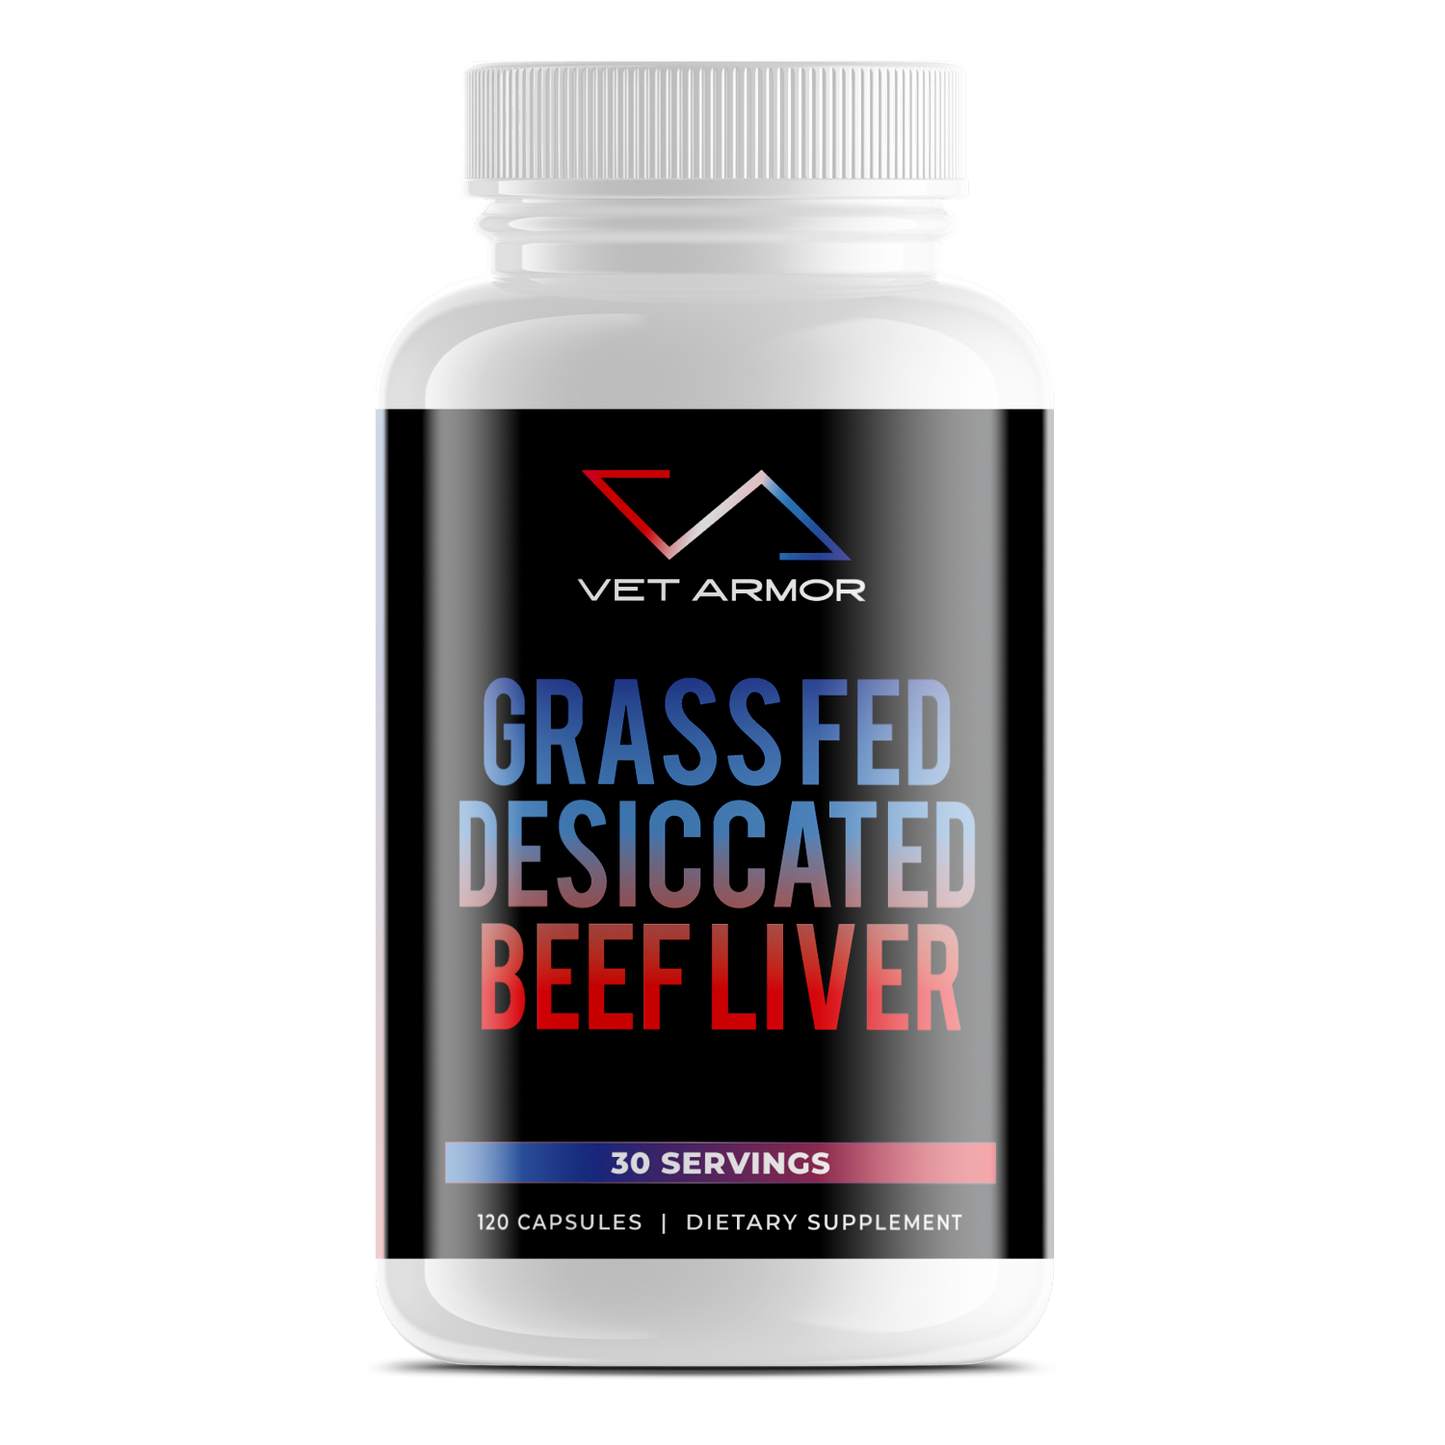 Grassfed Dessiccated Beef Liver